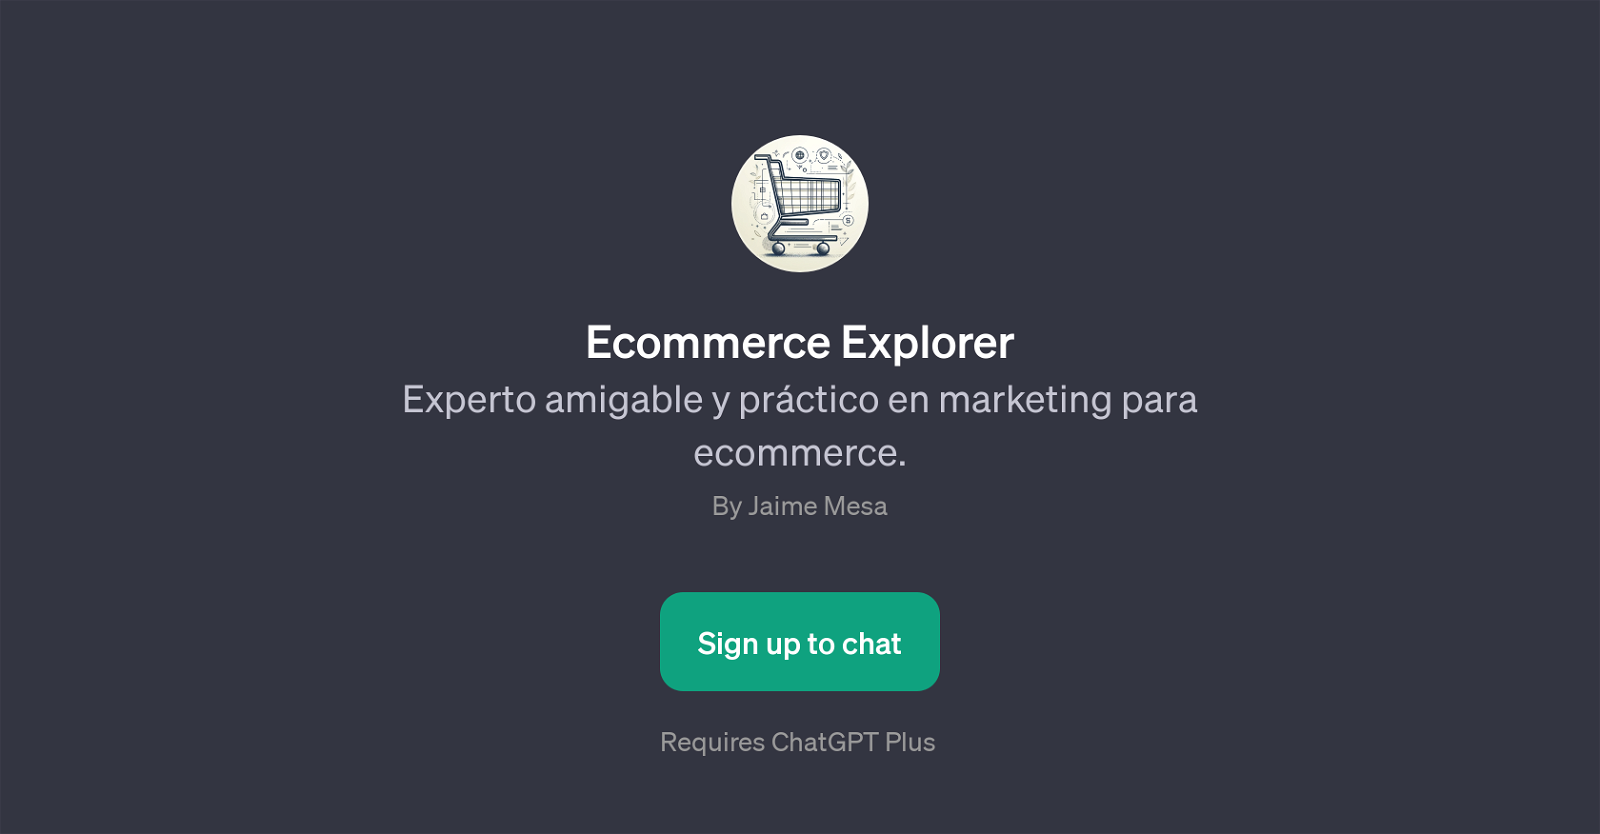 Ecommerce Explorer website